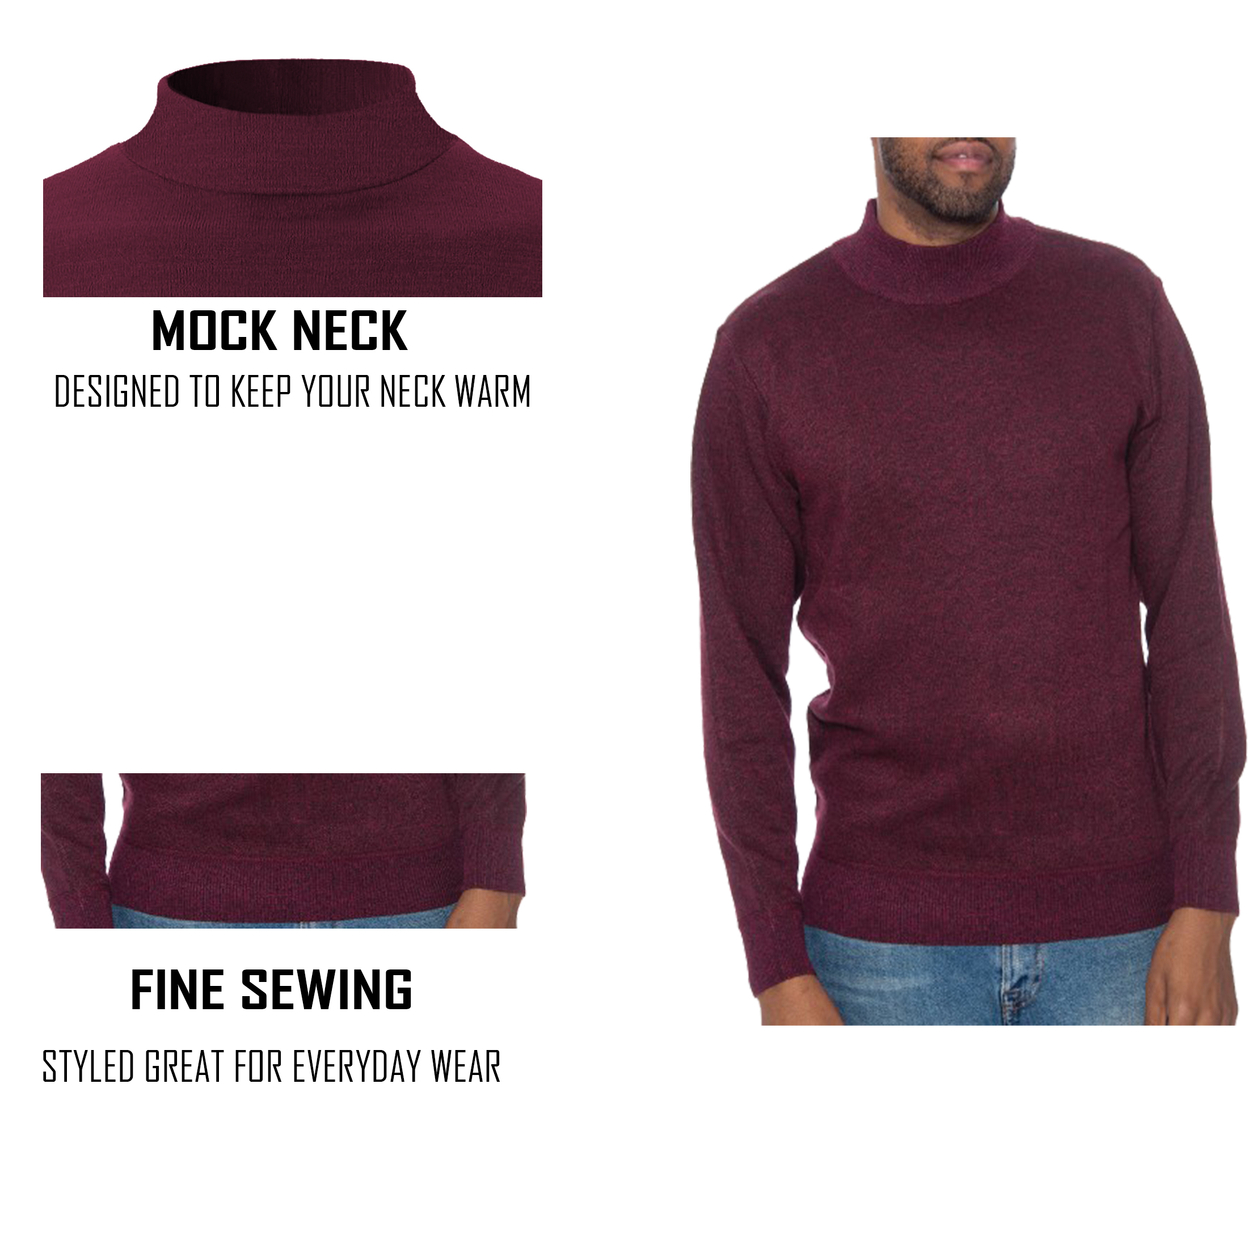 2-Pack: Men's Winter Warm Cozy Knit Slim Fit Mock Neck Sweater - White & Burgundy, Large